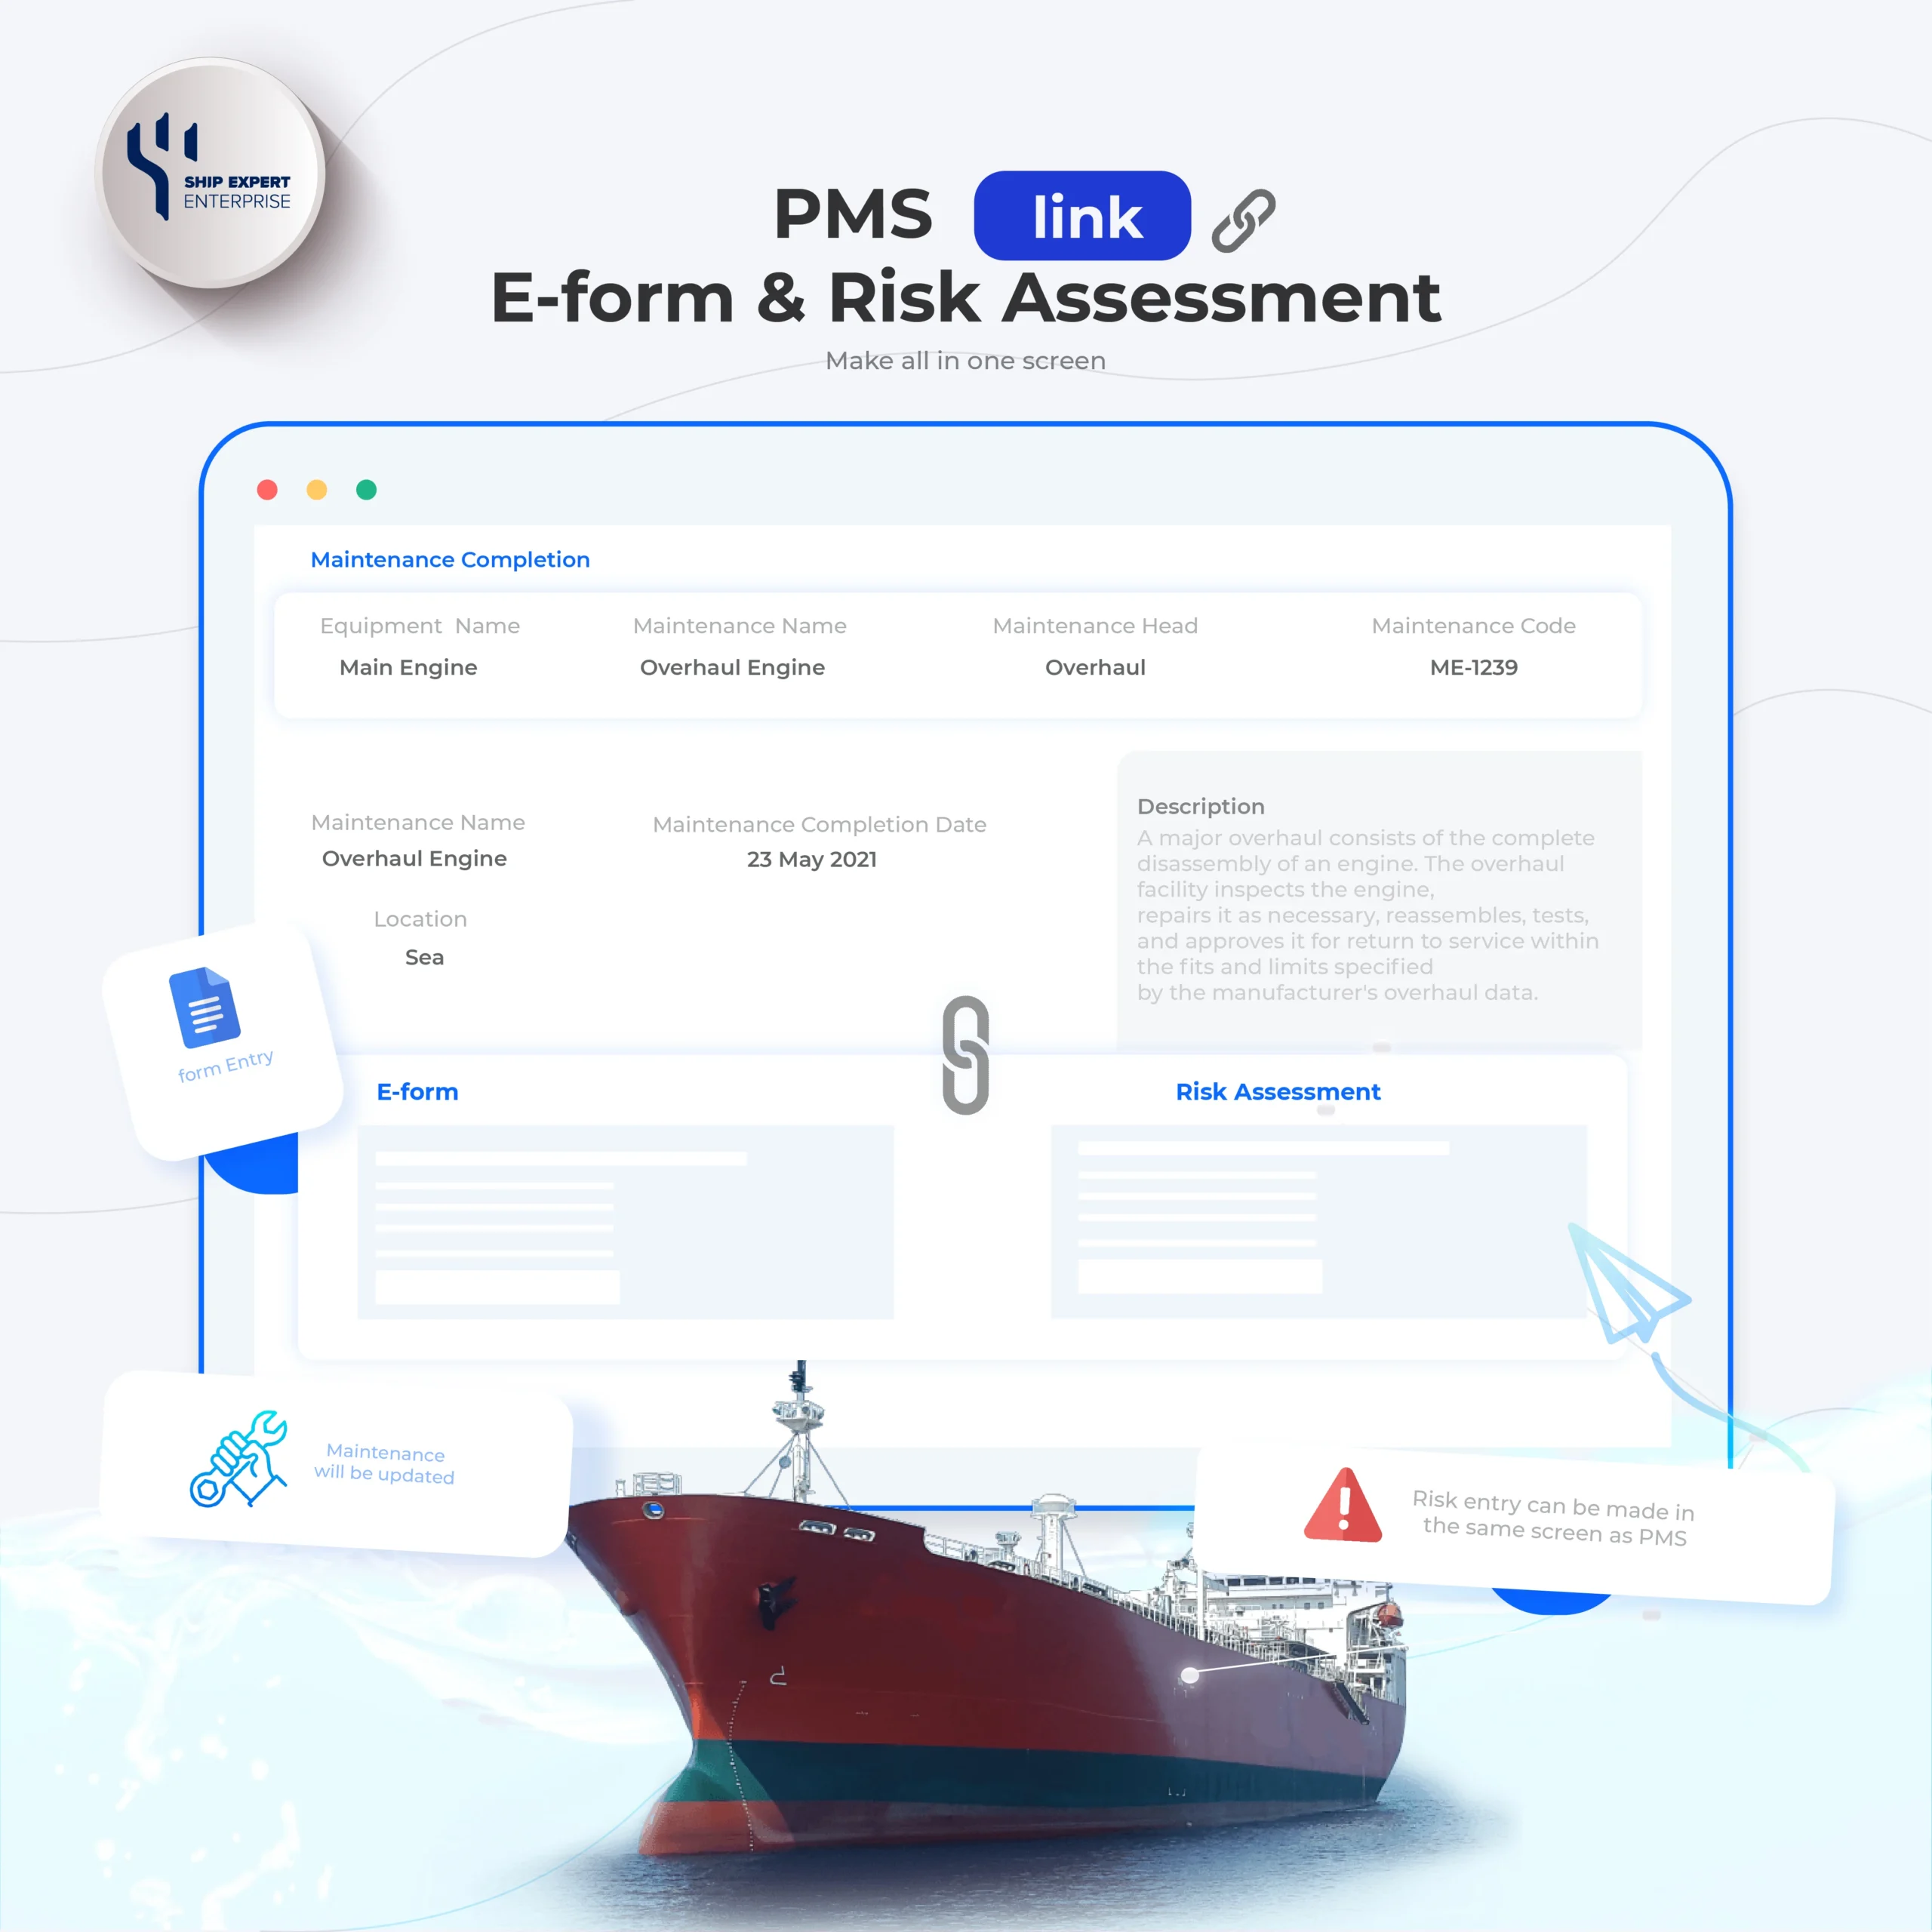 PMS link E-form & Risk Assessment